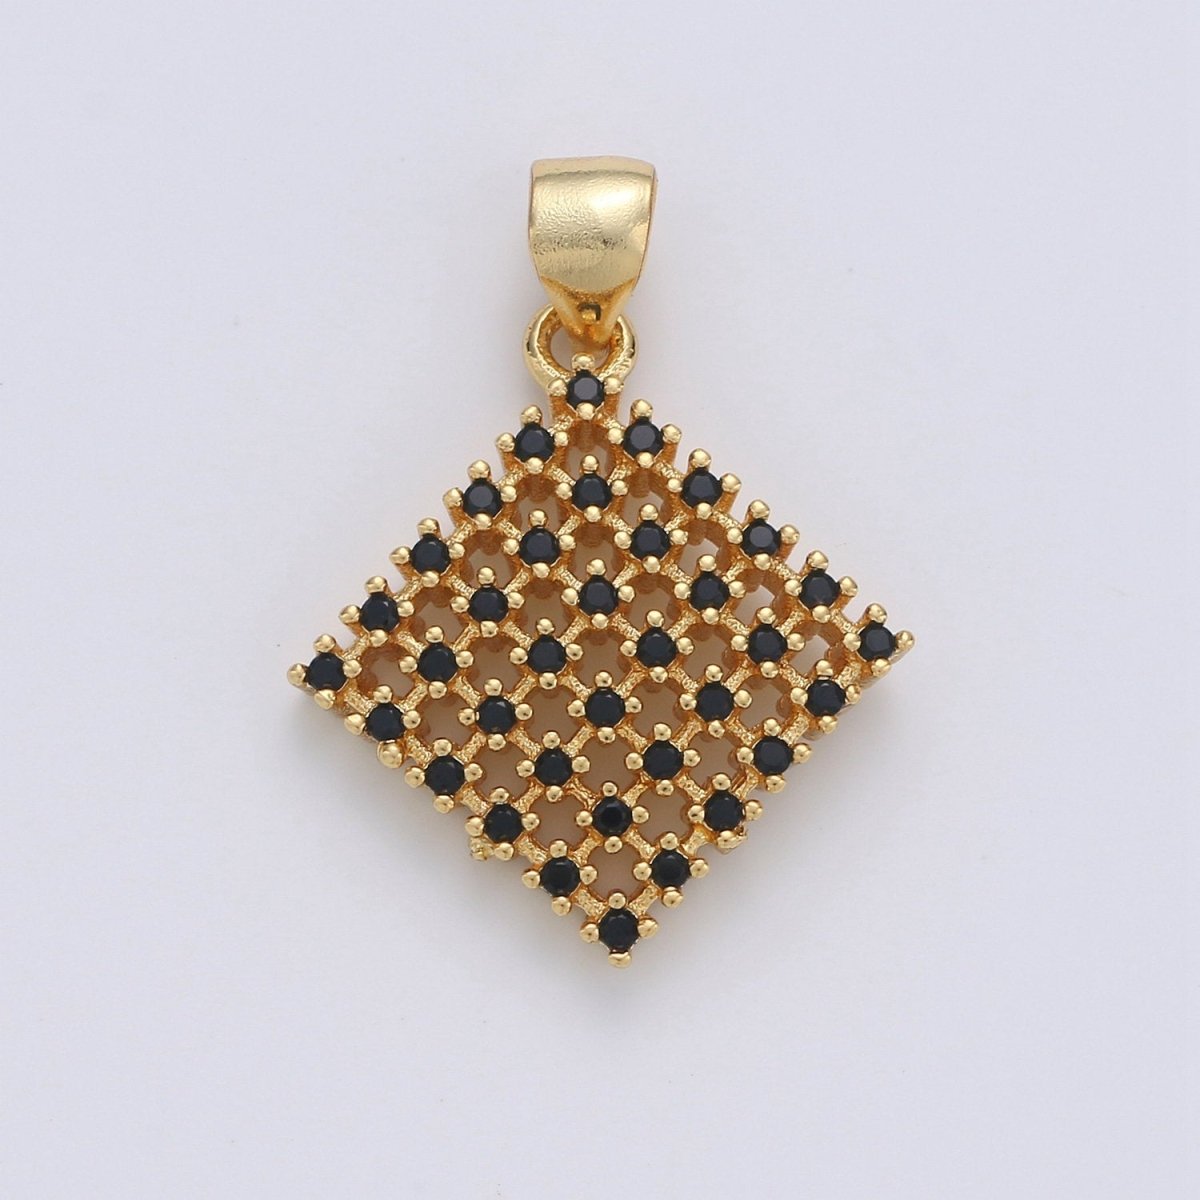 Cubic rhombus charm 14K gold Filled Black Cubic CZ Geometric Charm for Necklace Bracelet Earring Component I-670 - DLUXCA